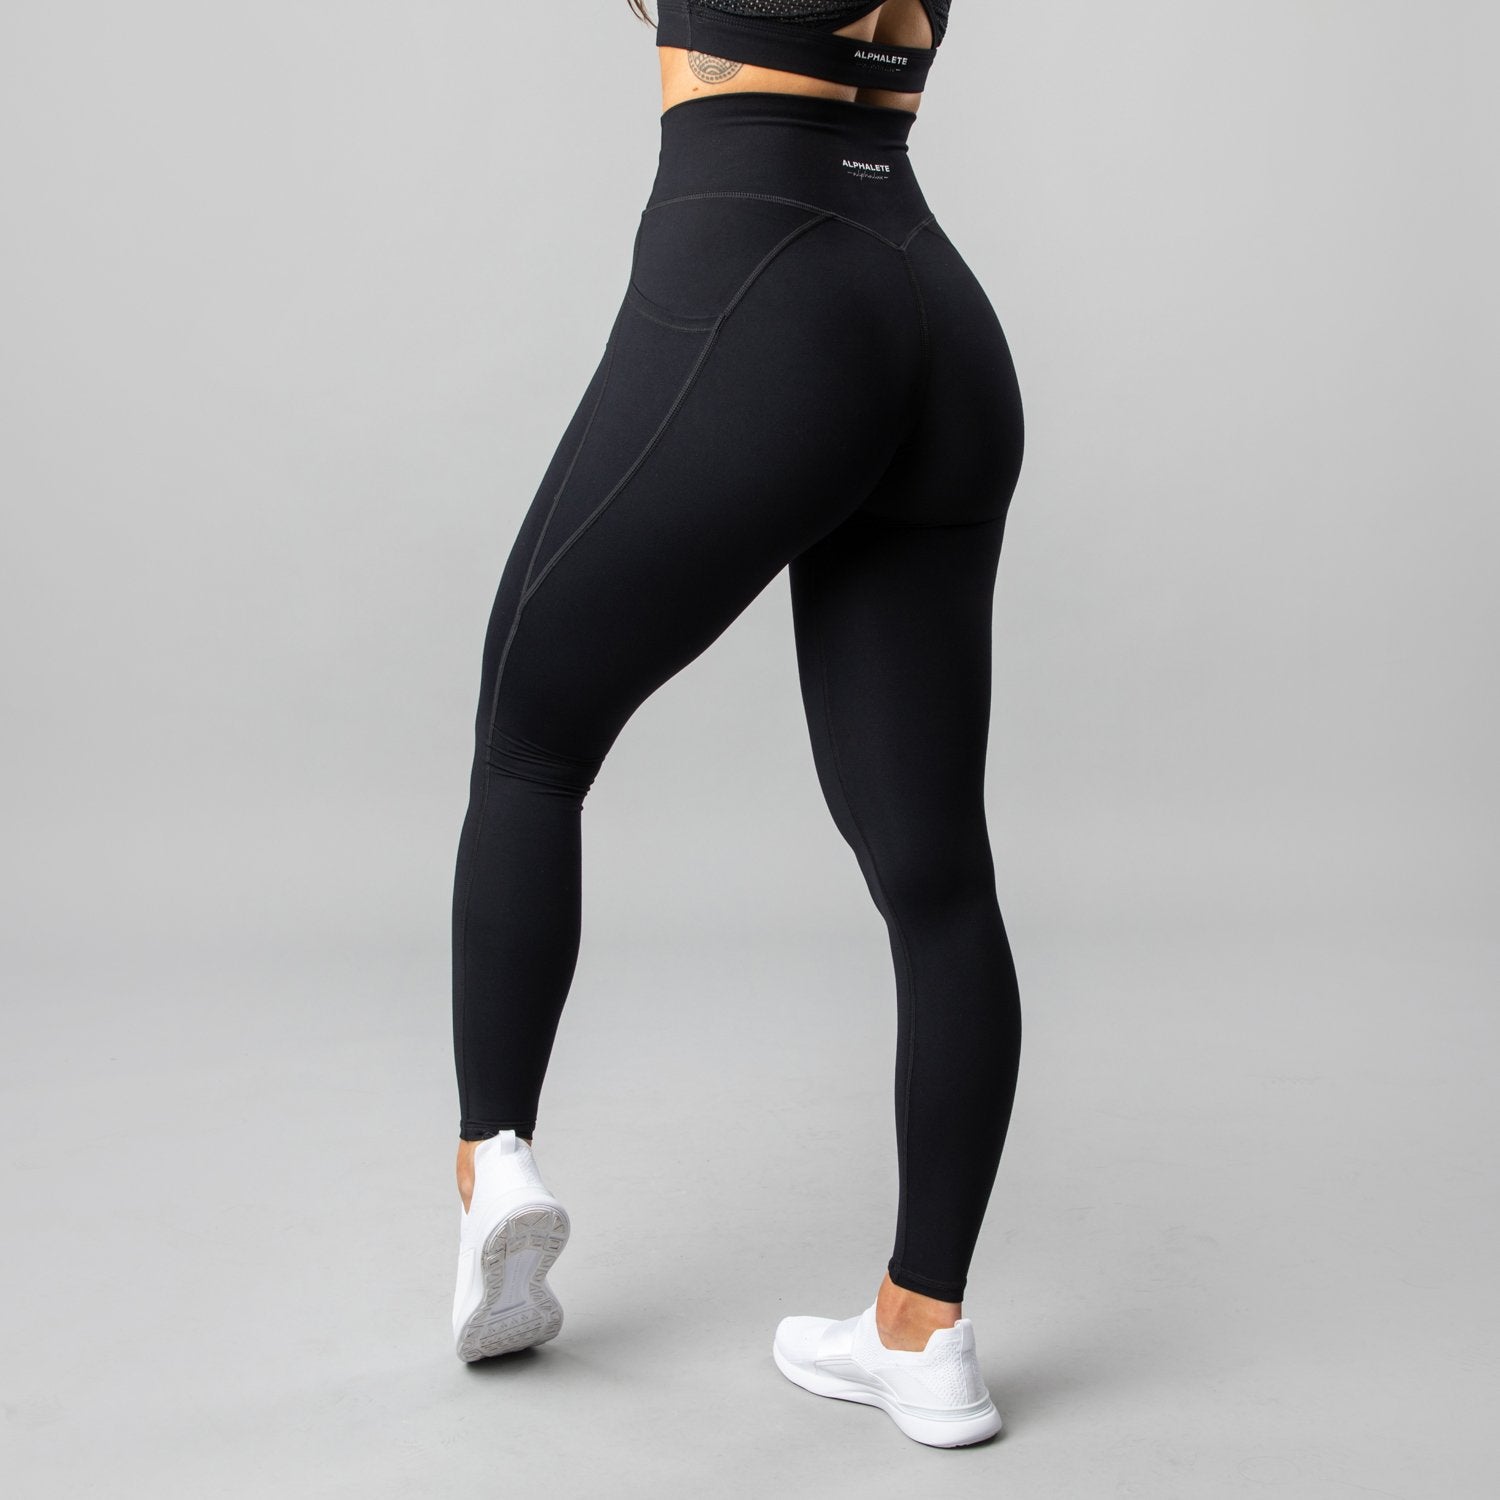 Alphalete Black Amplify leggings Tan Size M - $45 (35% Off Retail) - From  Evelyn